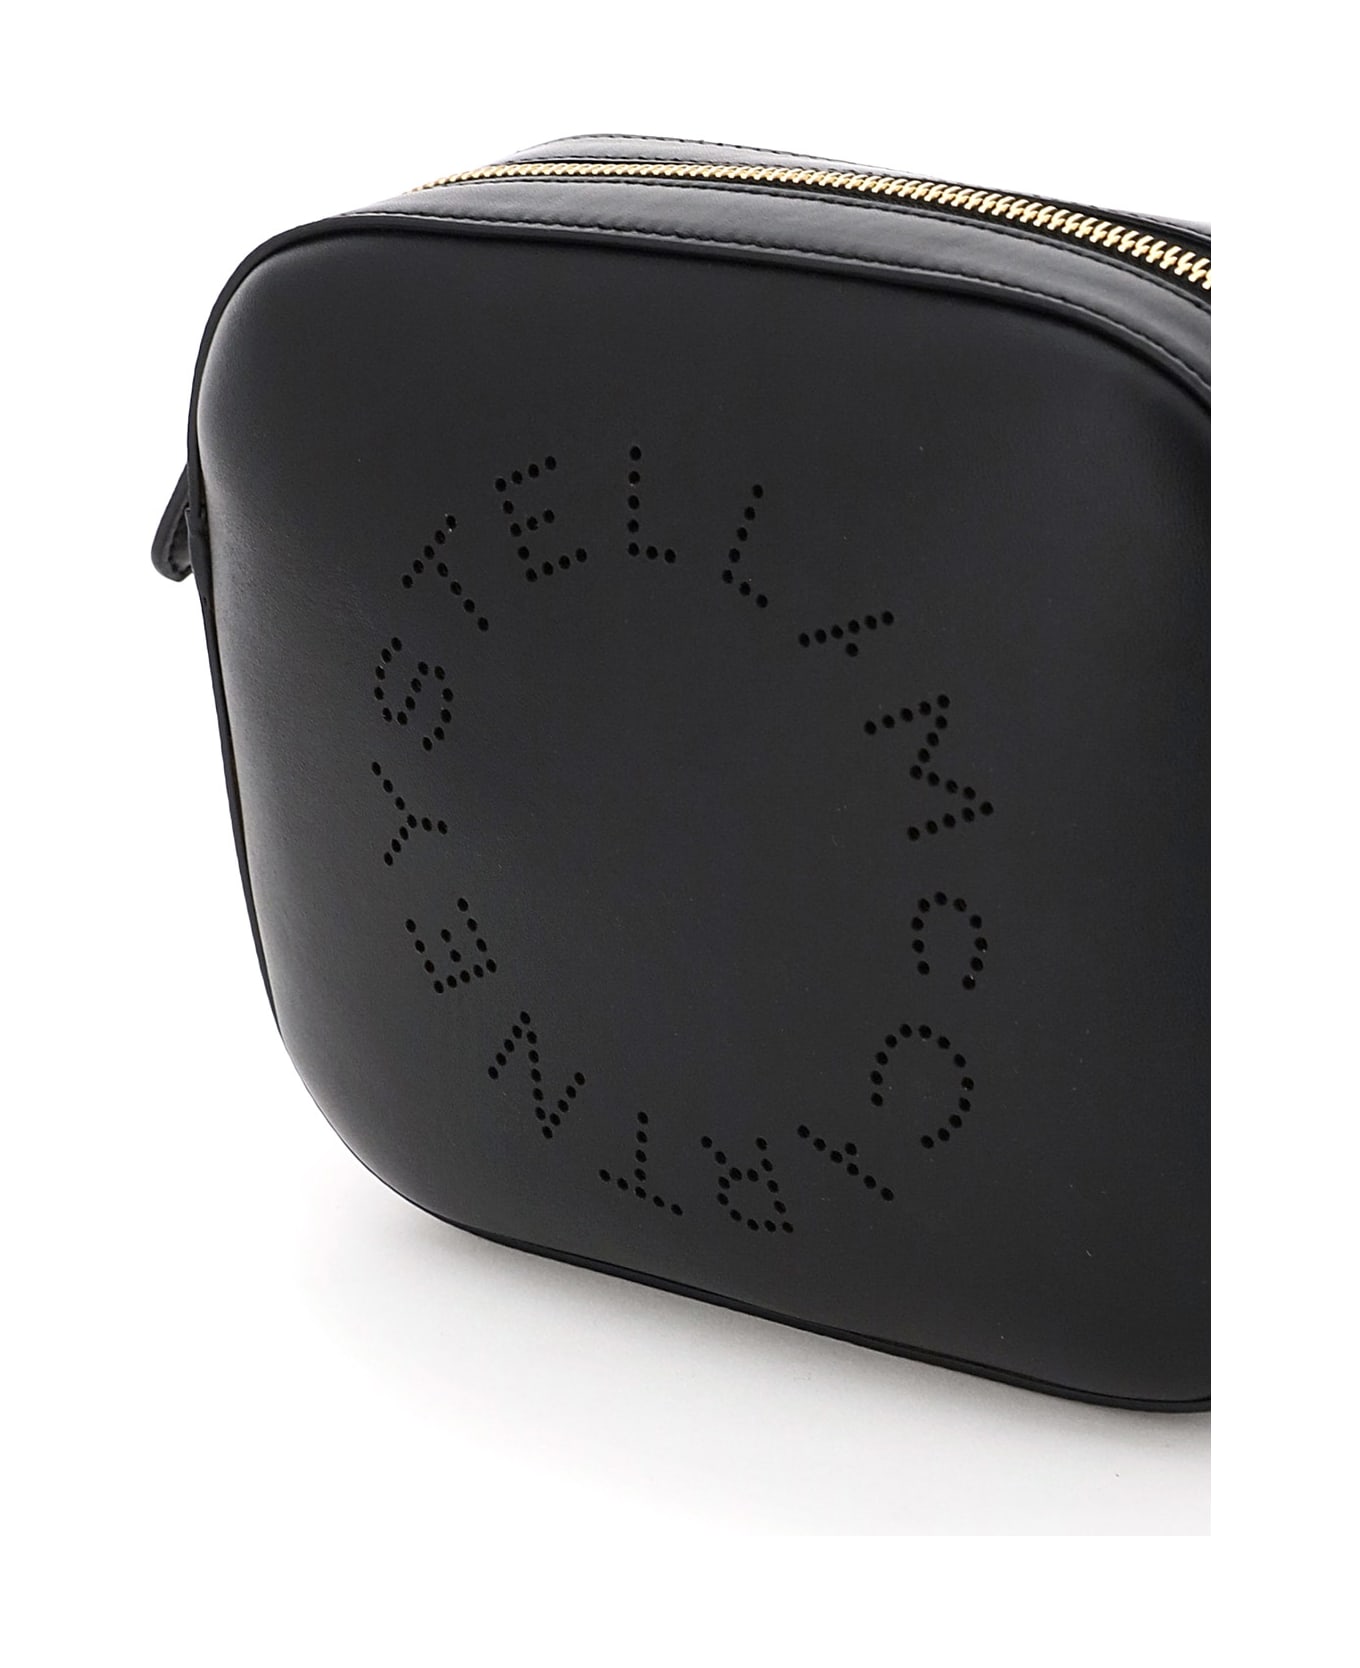 Stella McCartney Camera Bag With Perforated Stella Logo - BLACK